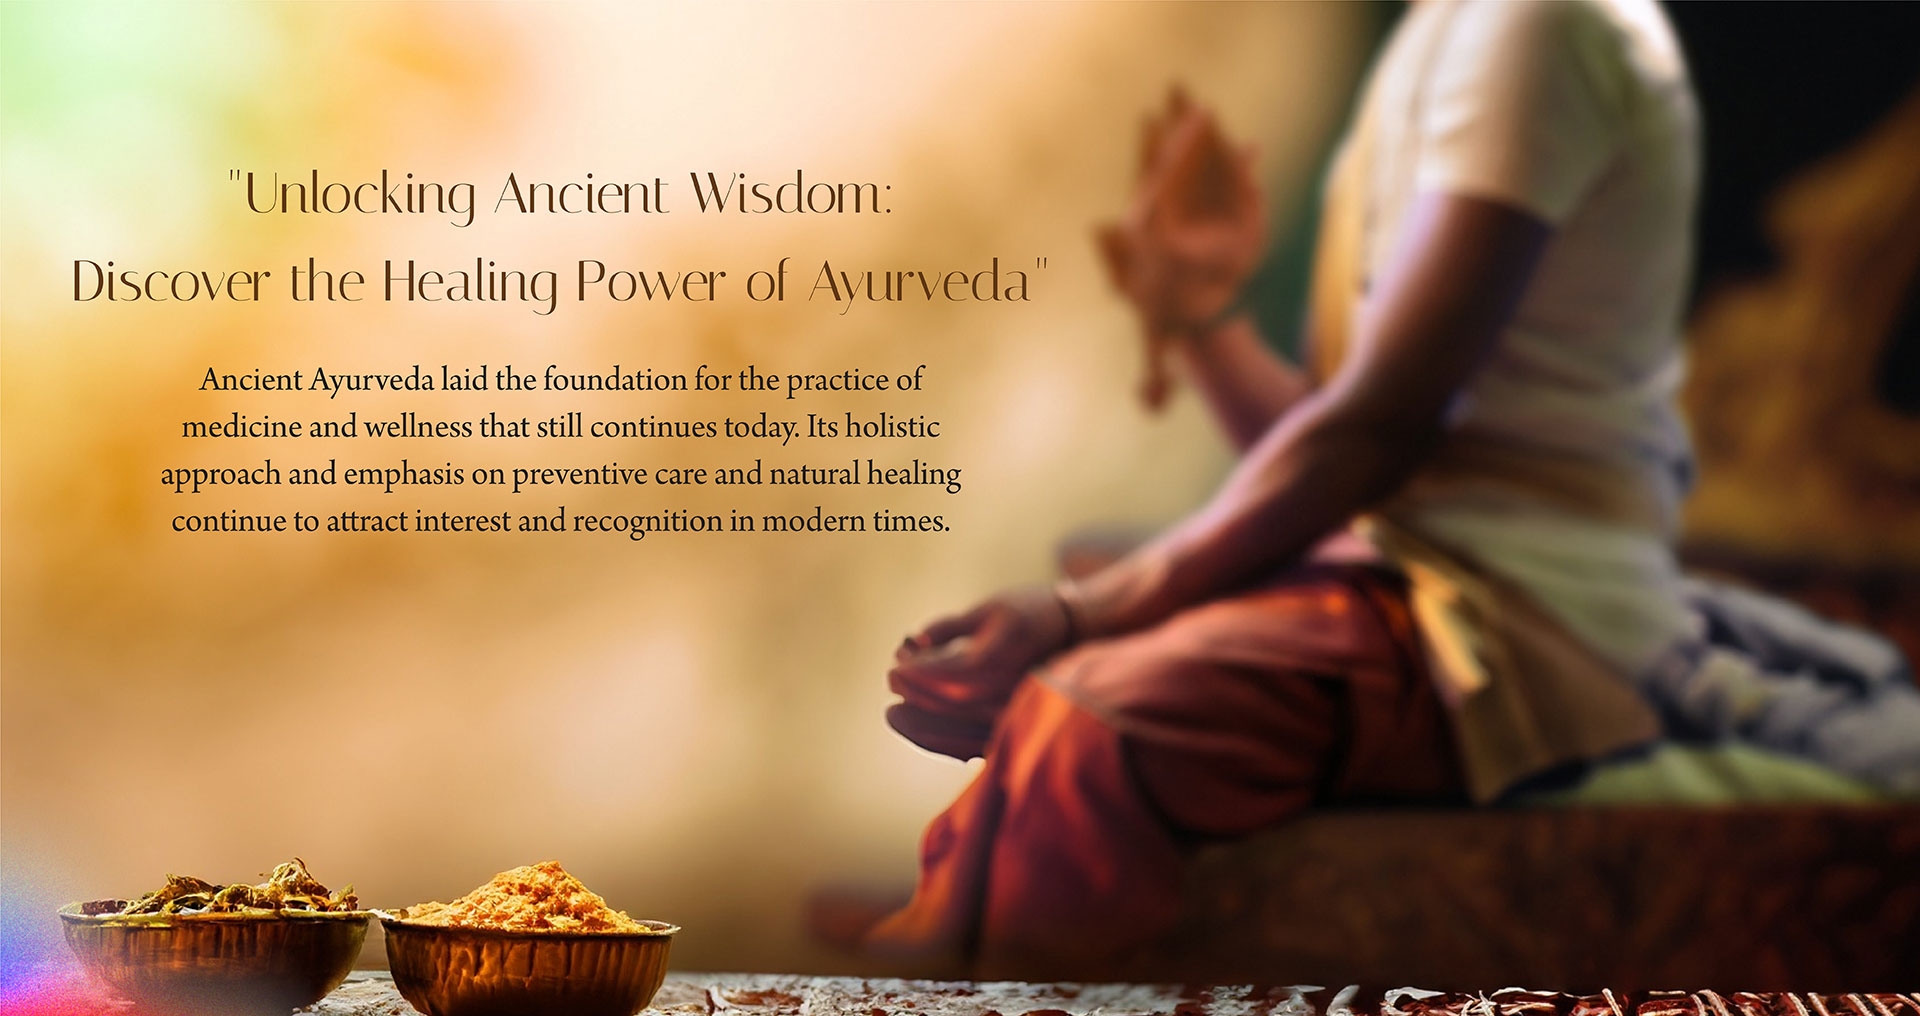 Healing power of Ayurveda